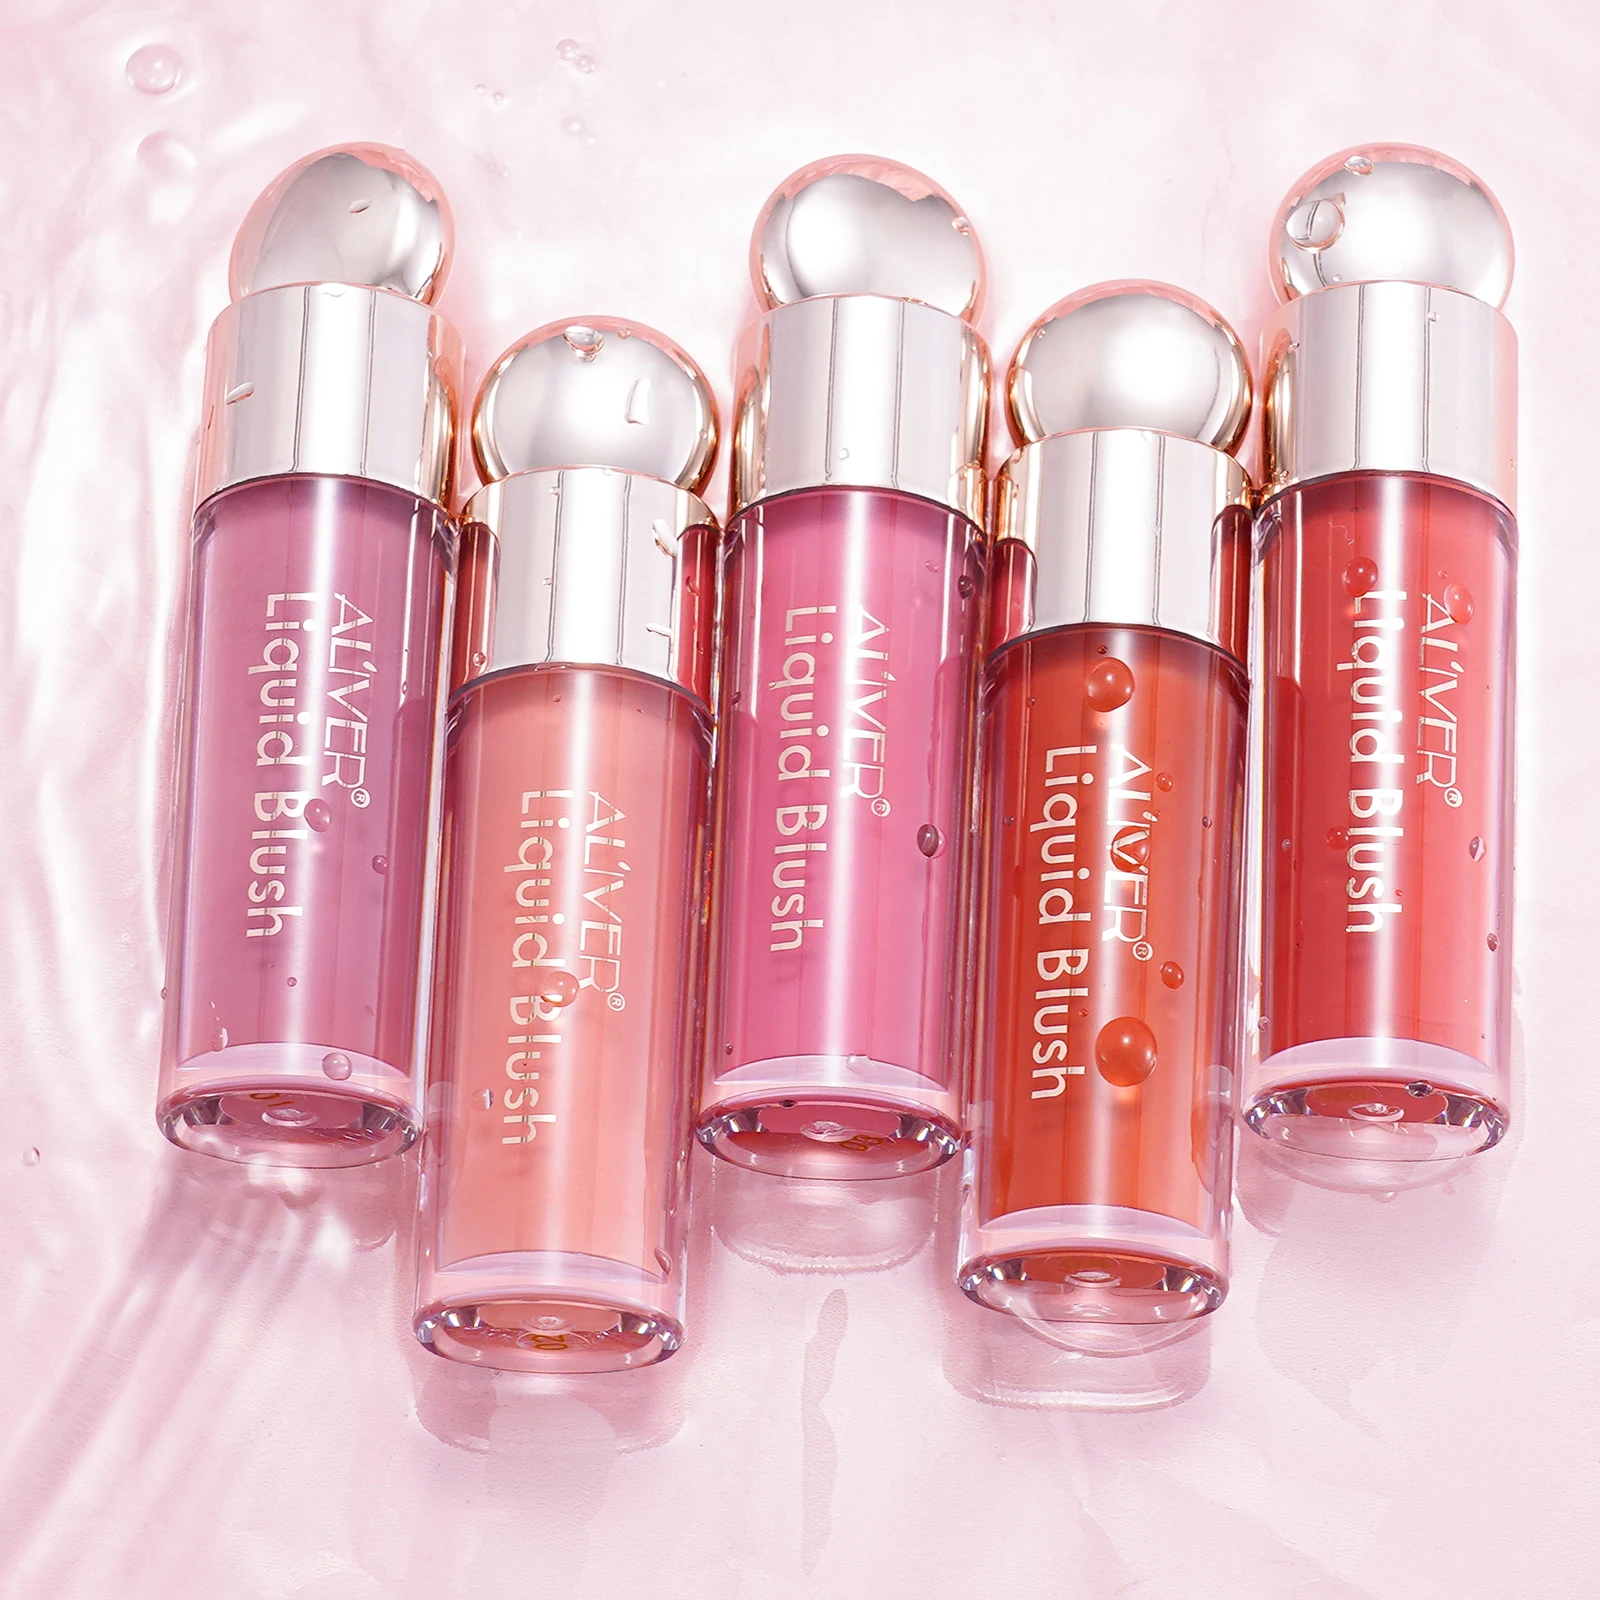 

Aliver Best Sale Pink Stuff Makeup Blush 5 Color Long Lasting Rare Beauty Liquid Blush Cream For Cheeks